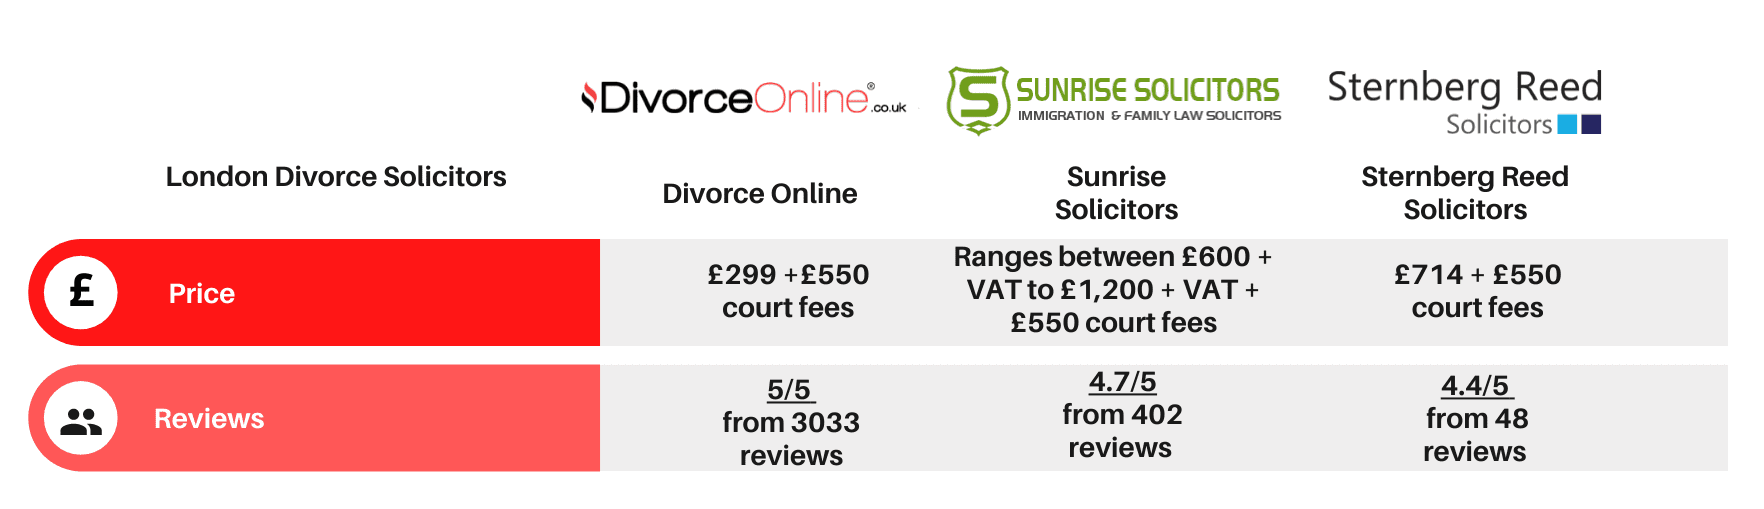 London Divorce Price Comparison